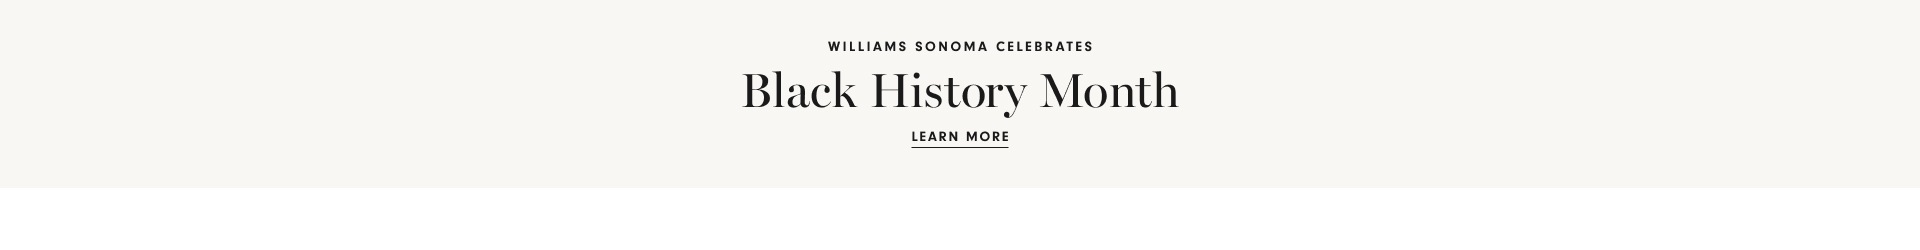 Williams Sonoma Celebrates Black History Month